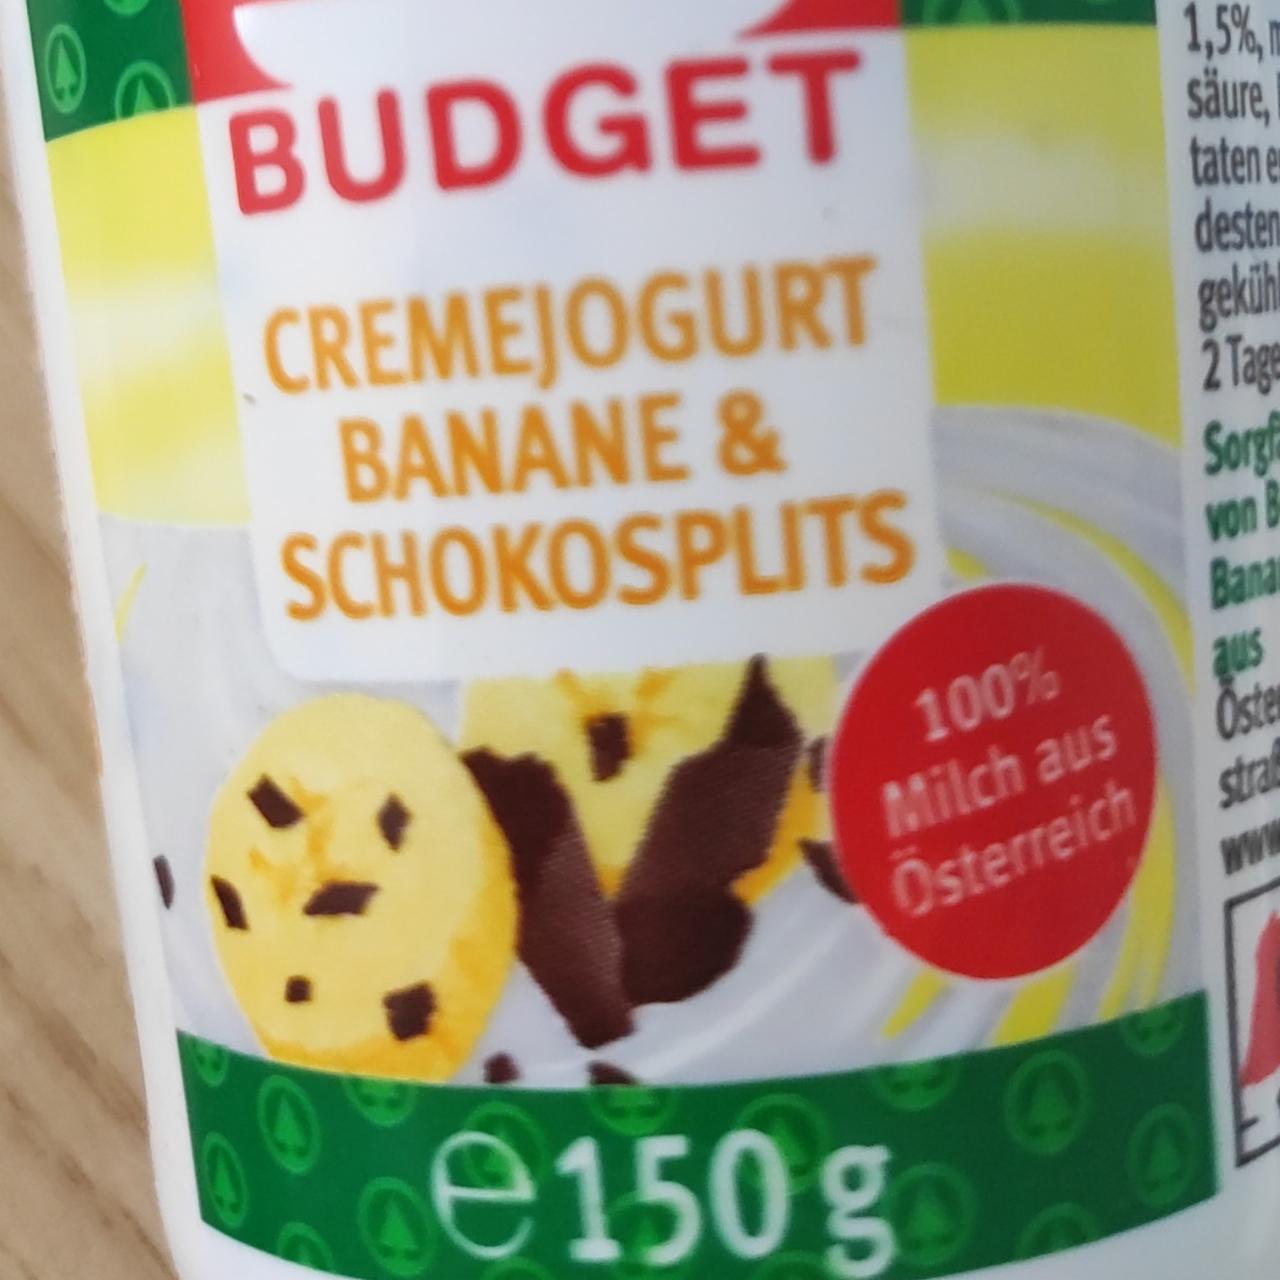 Fotografie - Cremejogurt banane & schokosplits S Budget